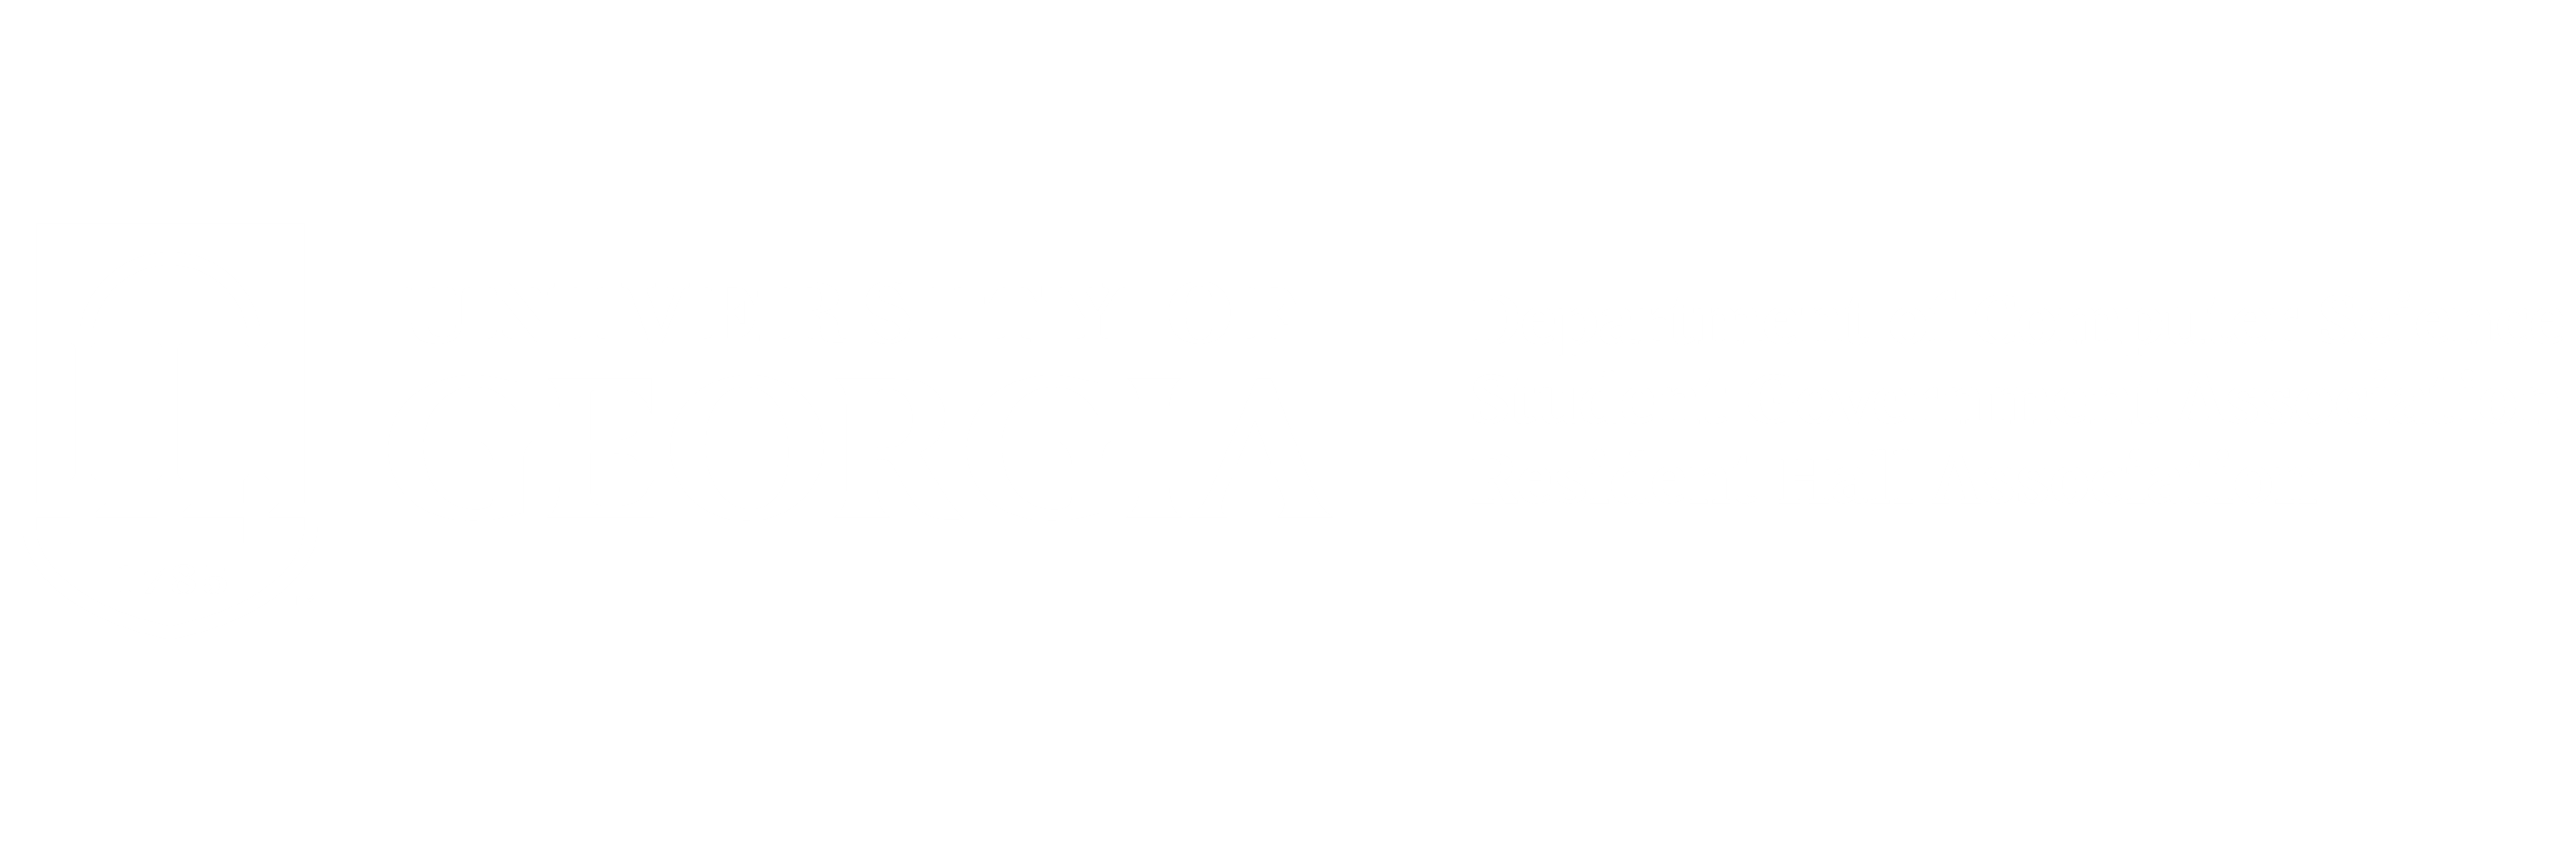 UGA CS Department, Student Govt Association, Resident Hall Association